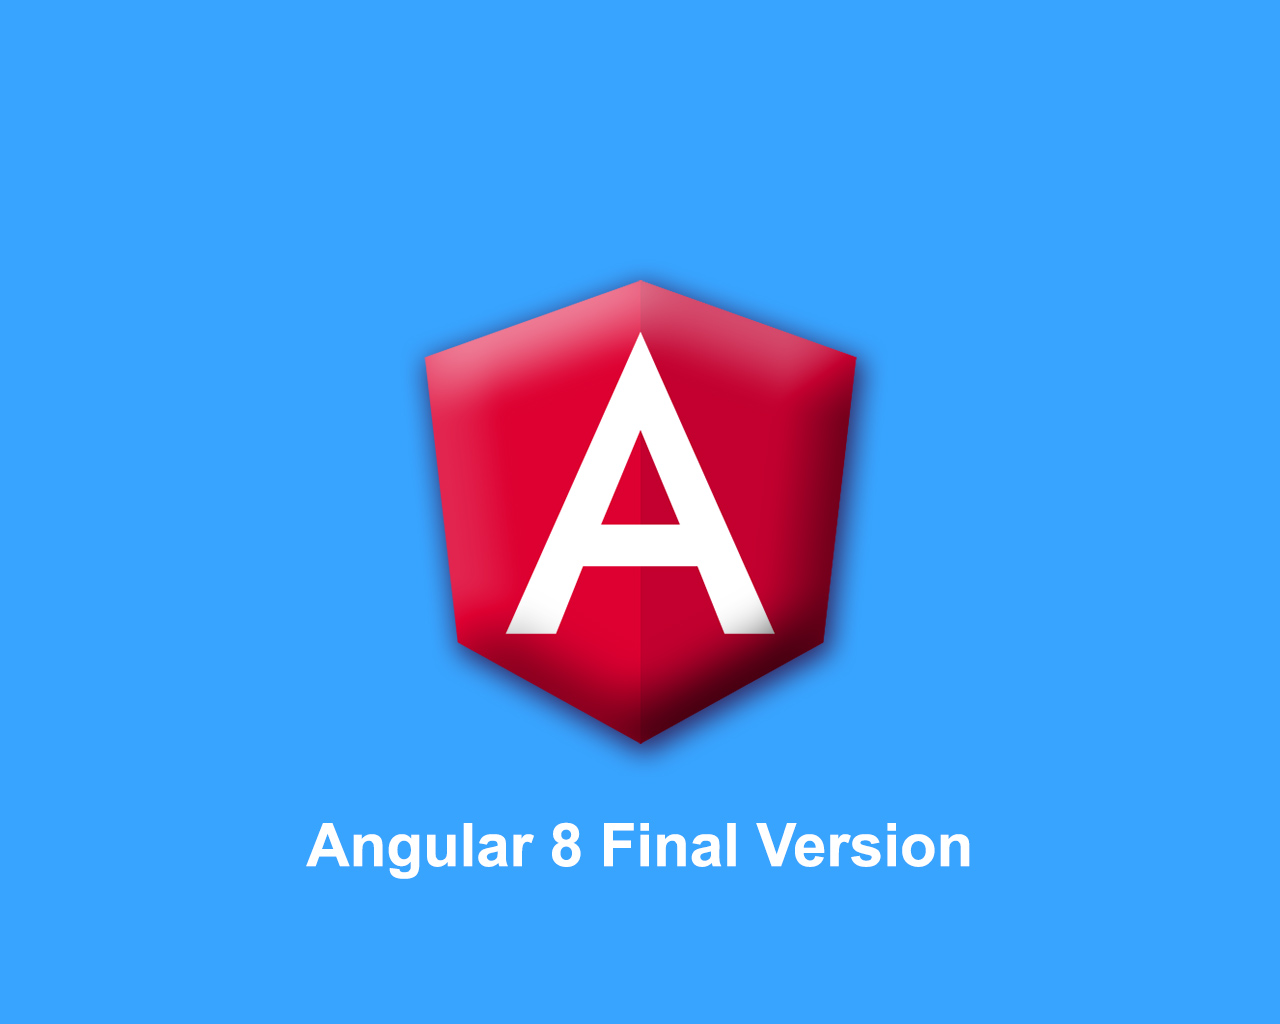 Angular 8 Final Version released